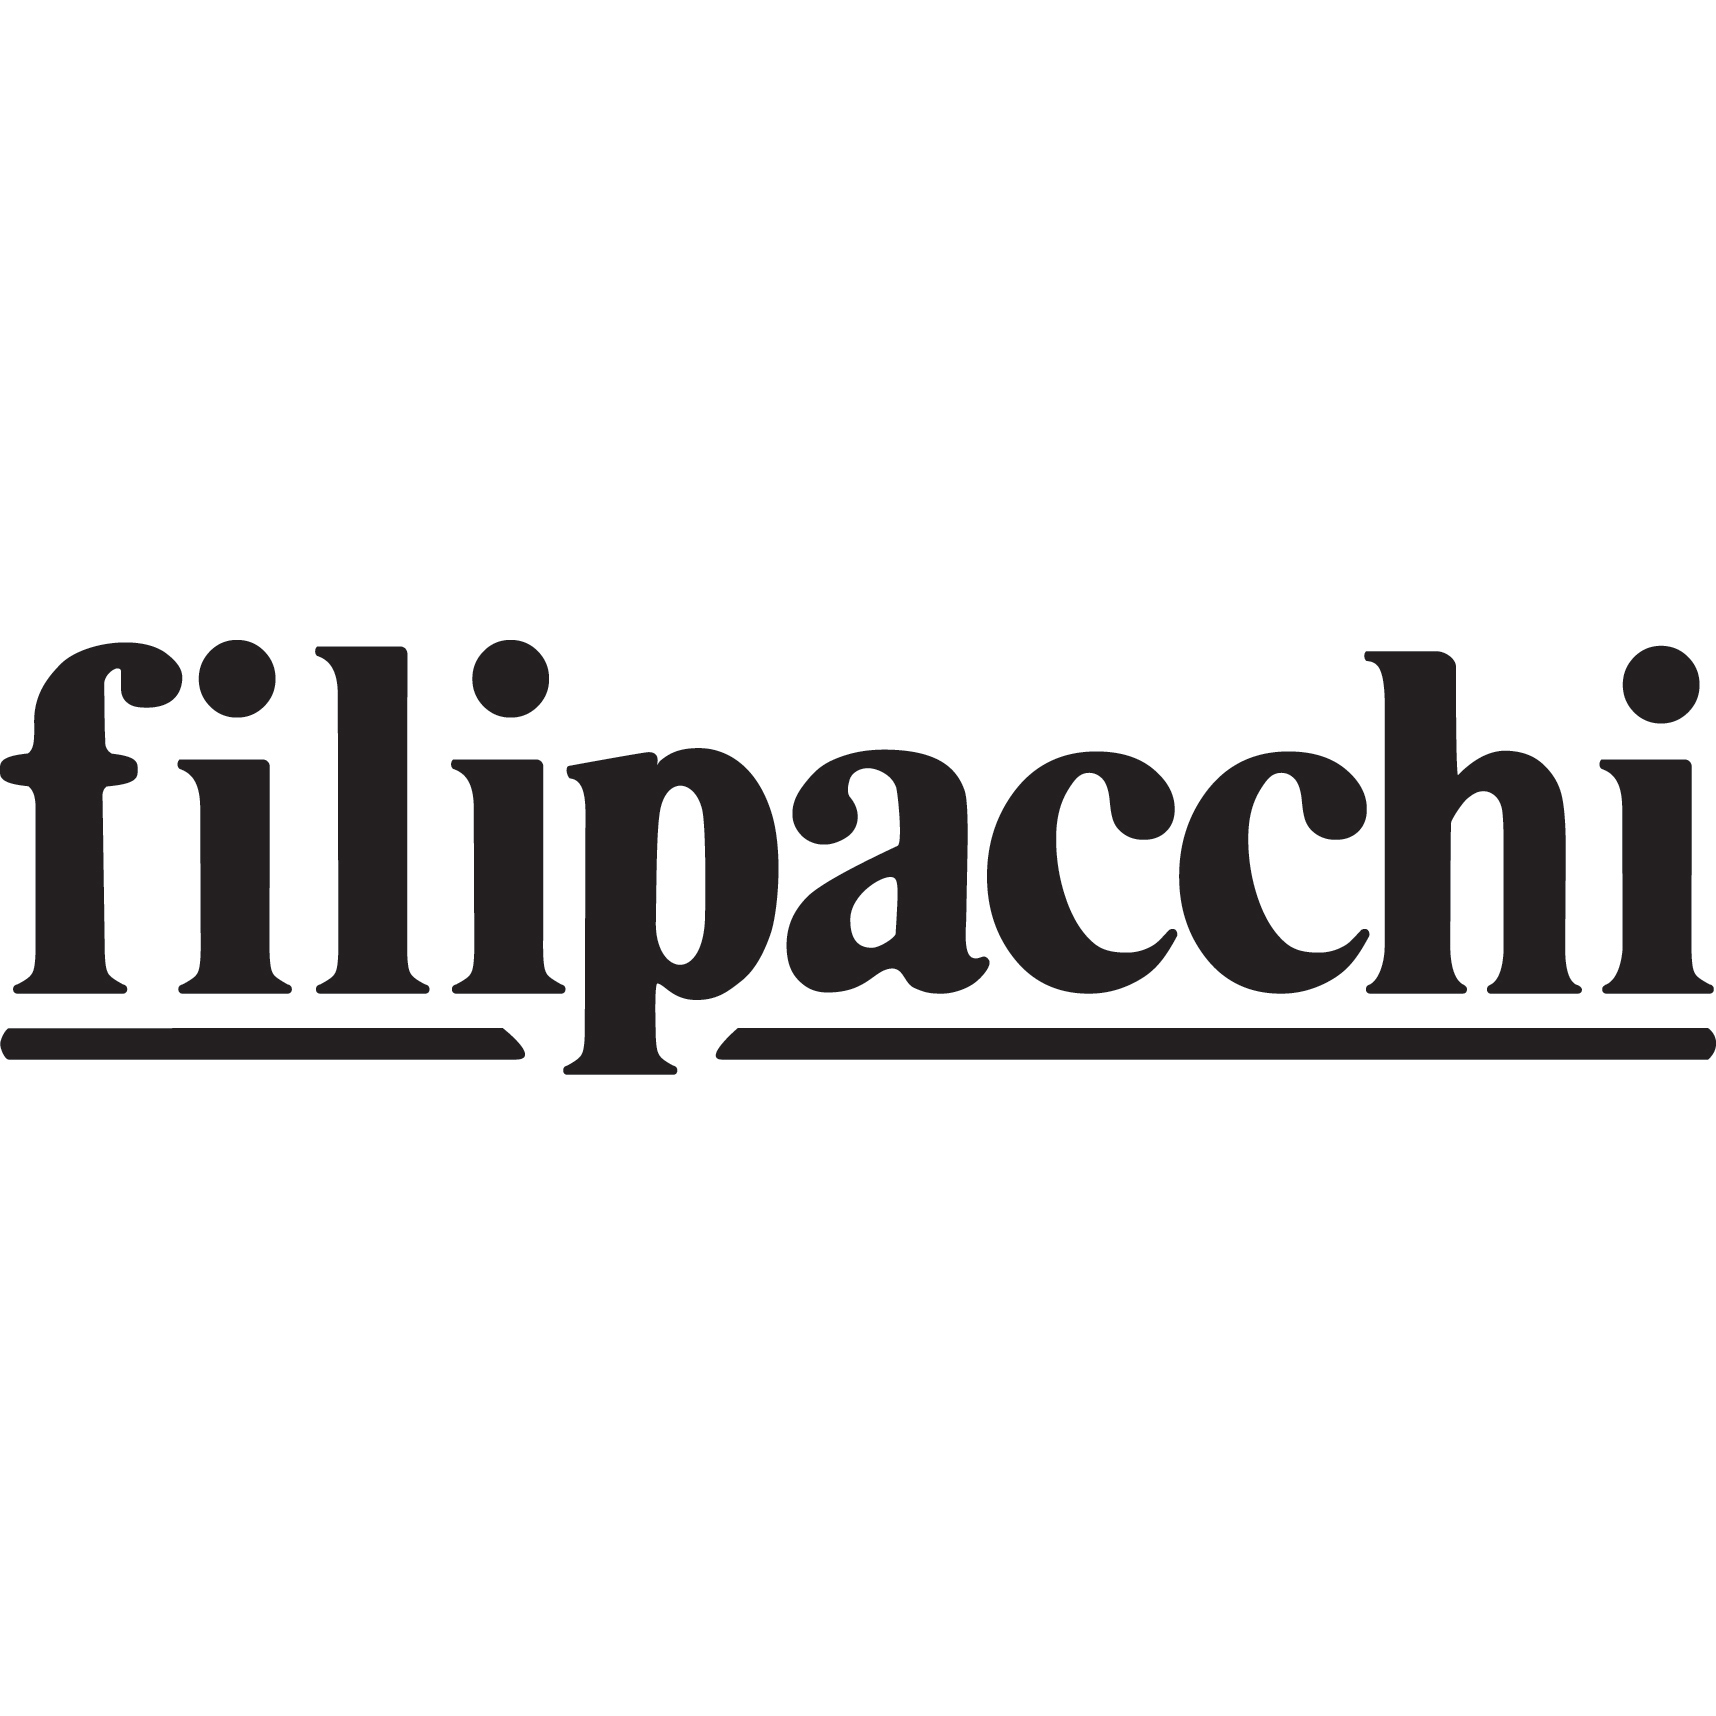 Filipacchi